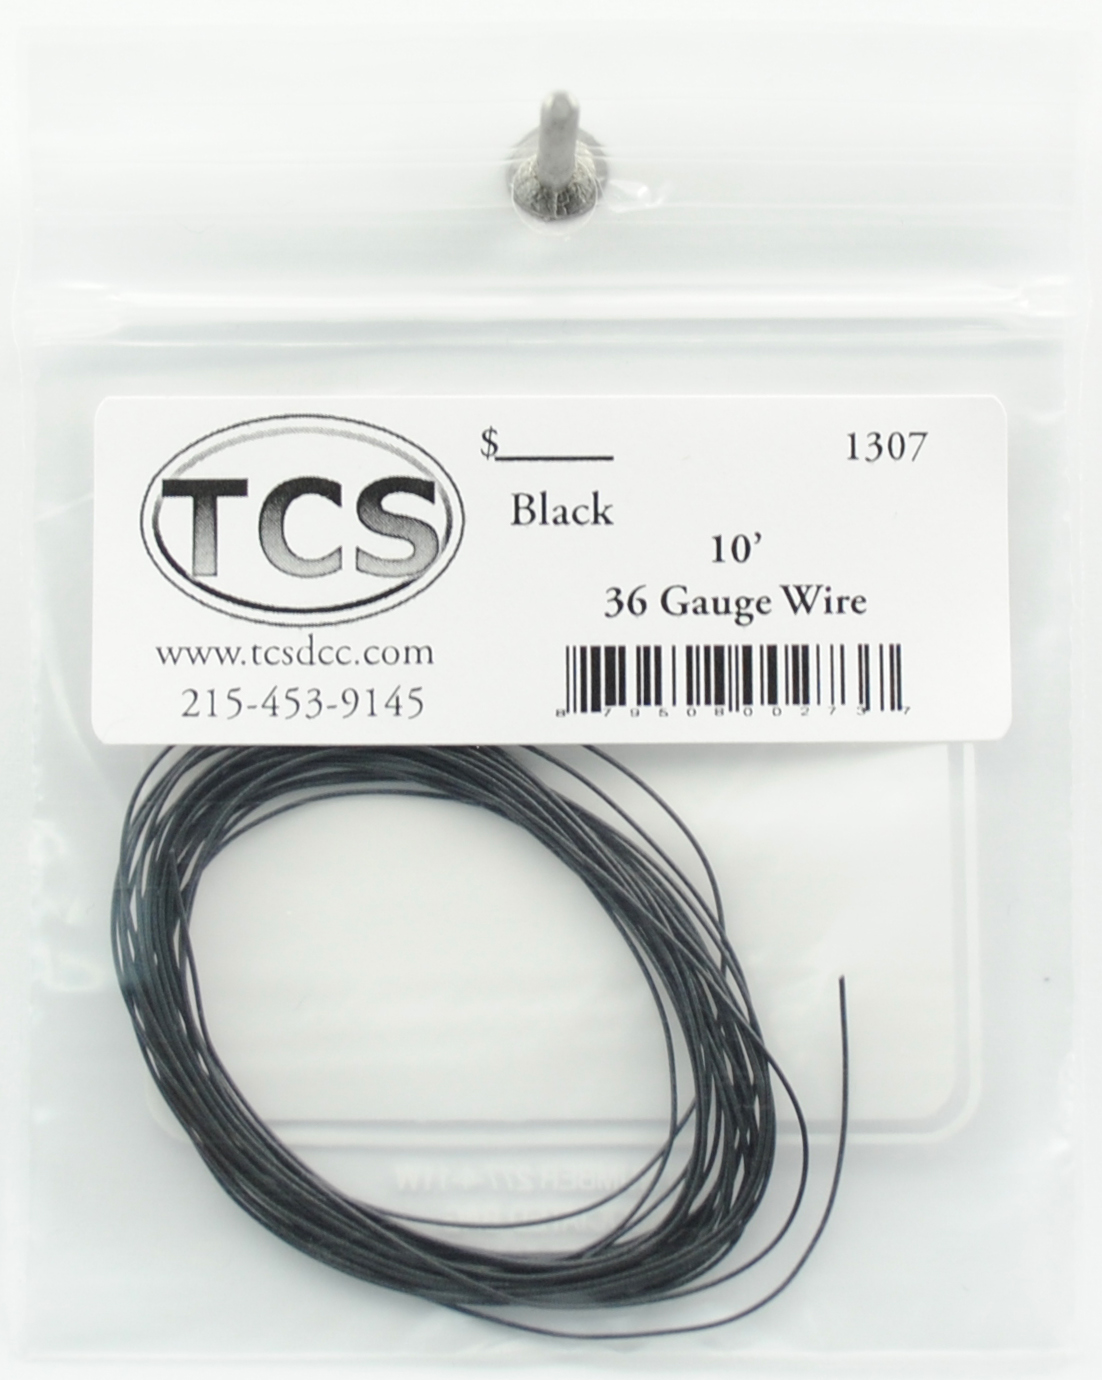 10ft 36 Gauge Black Wire